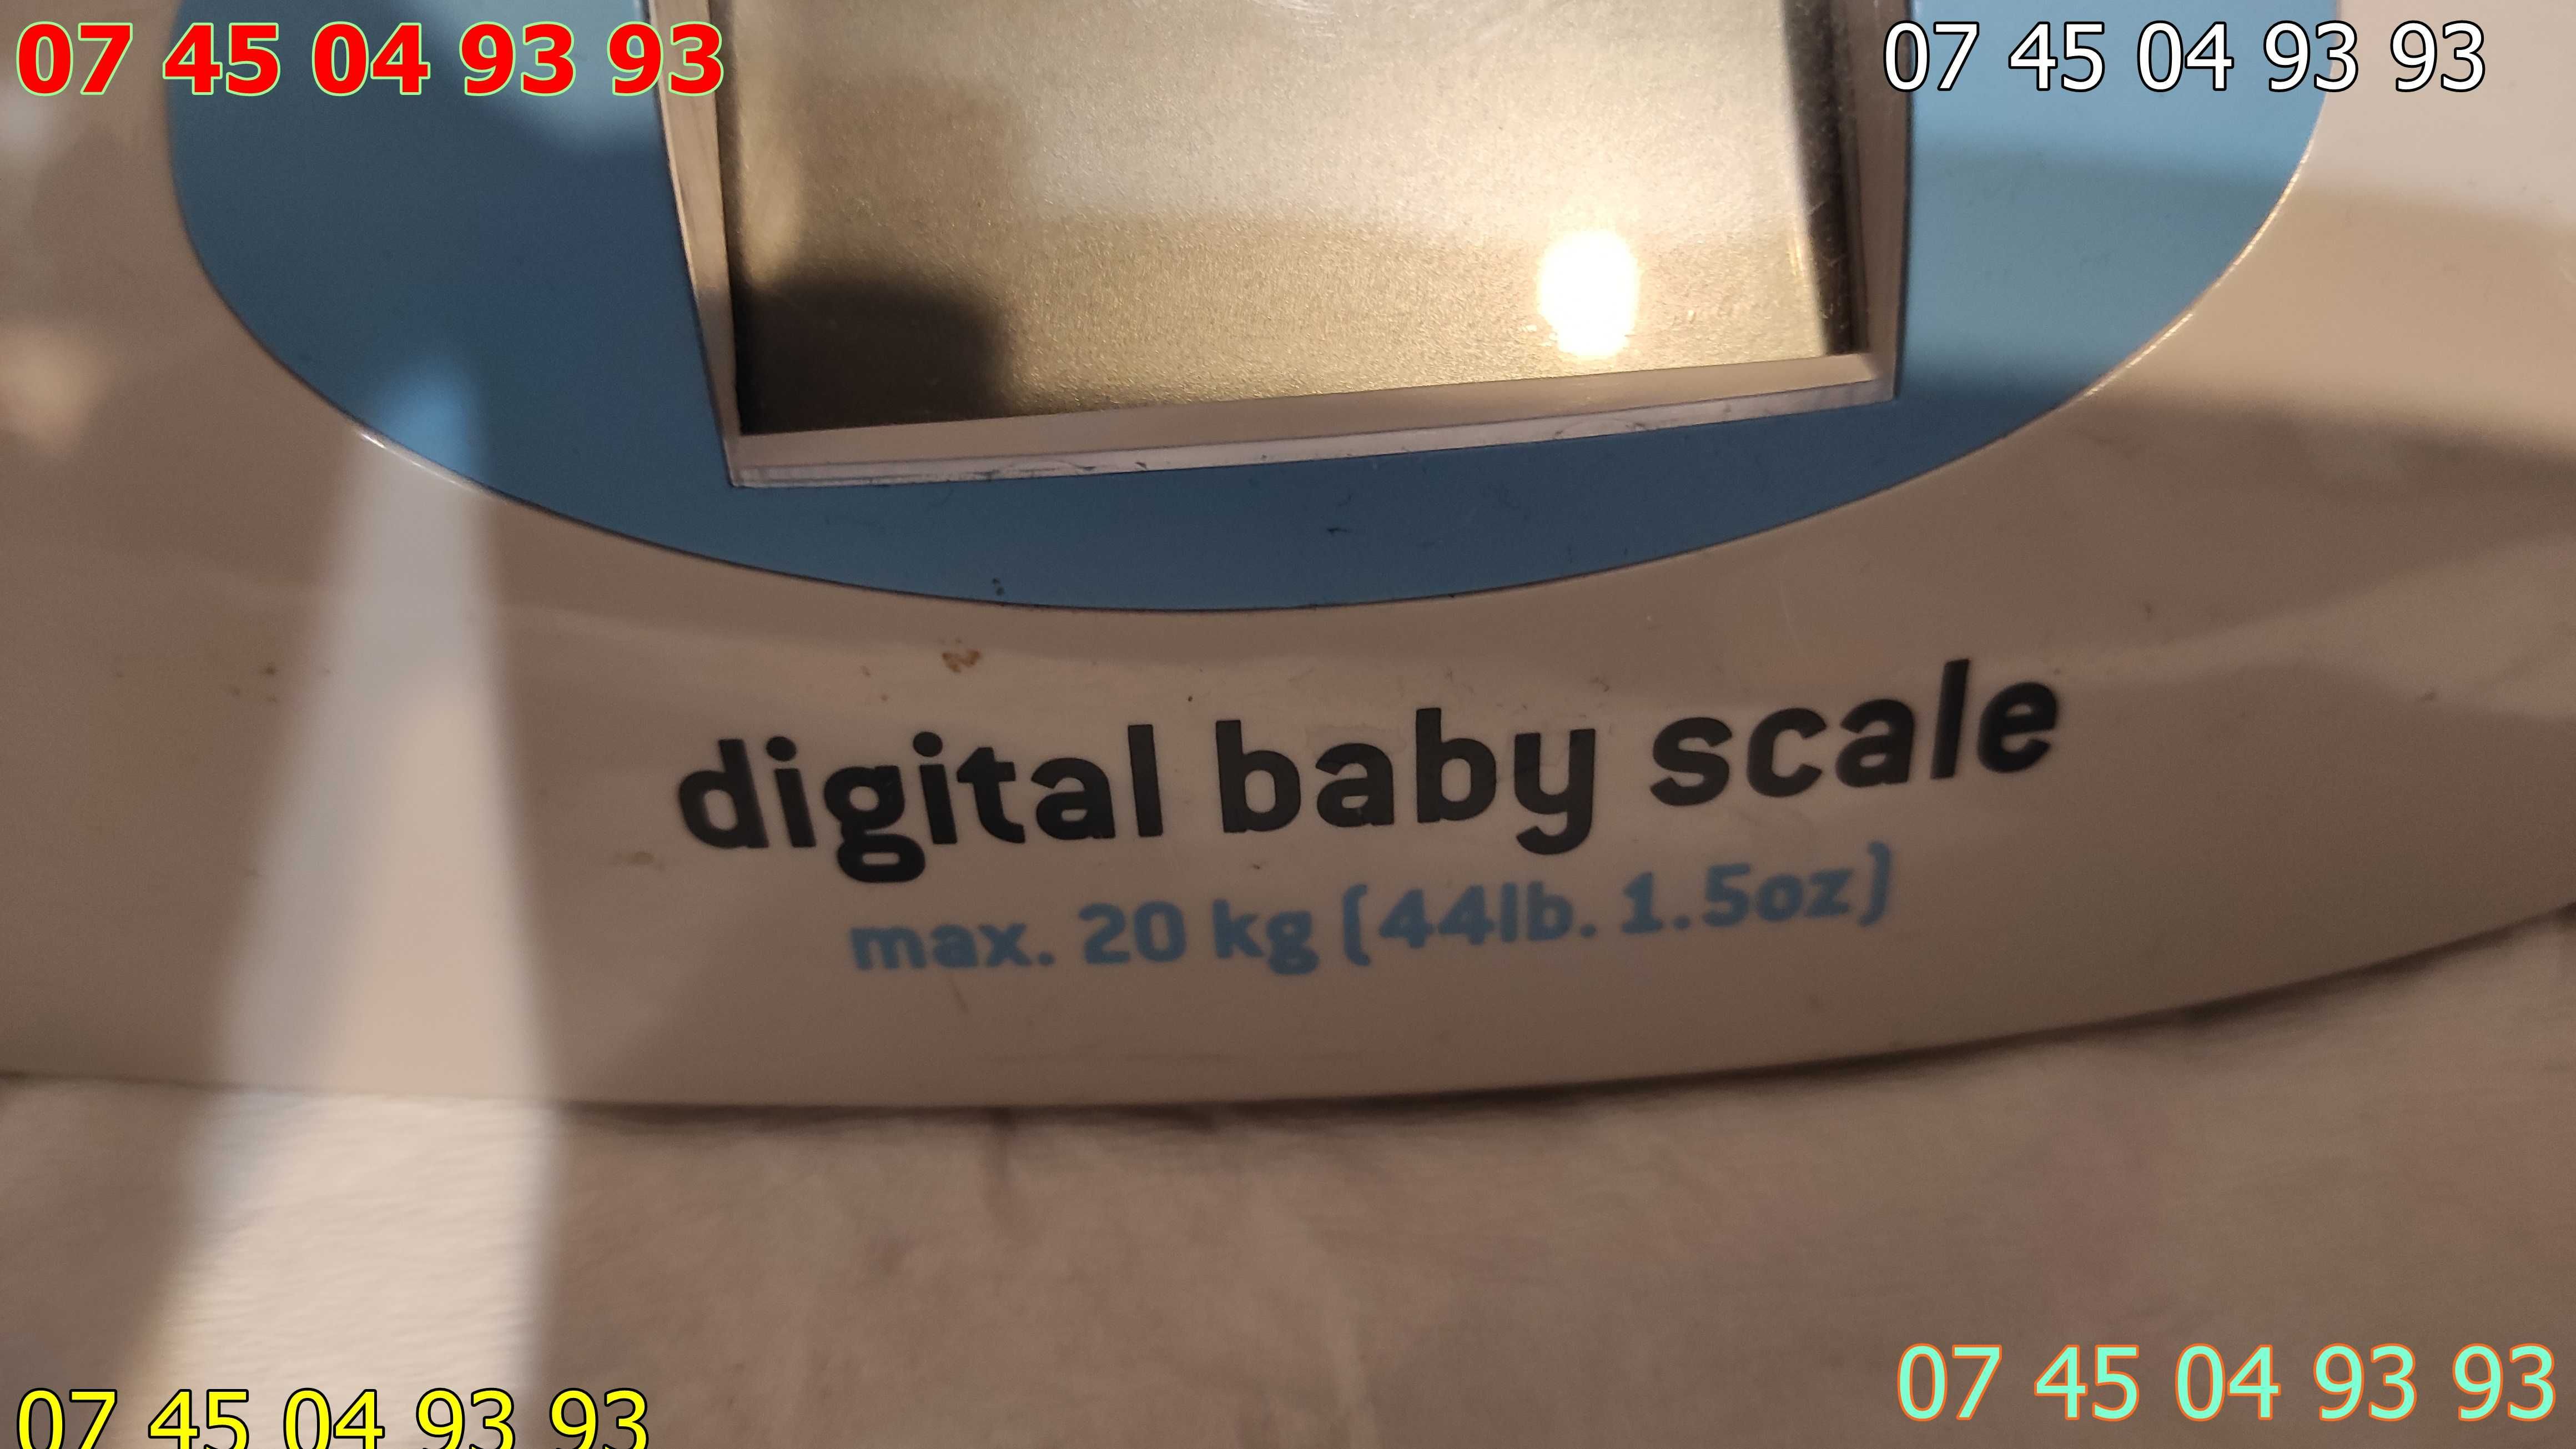 Cantar bebelusi digital zelmer maxim 20kg perfect functional